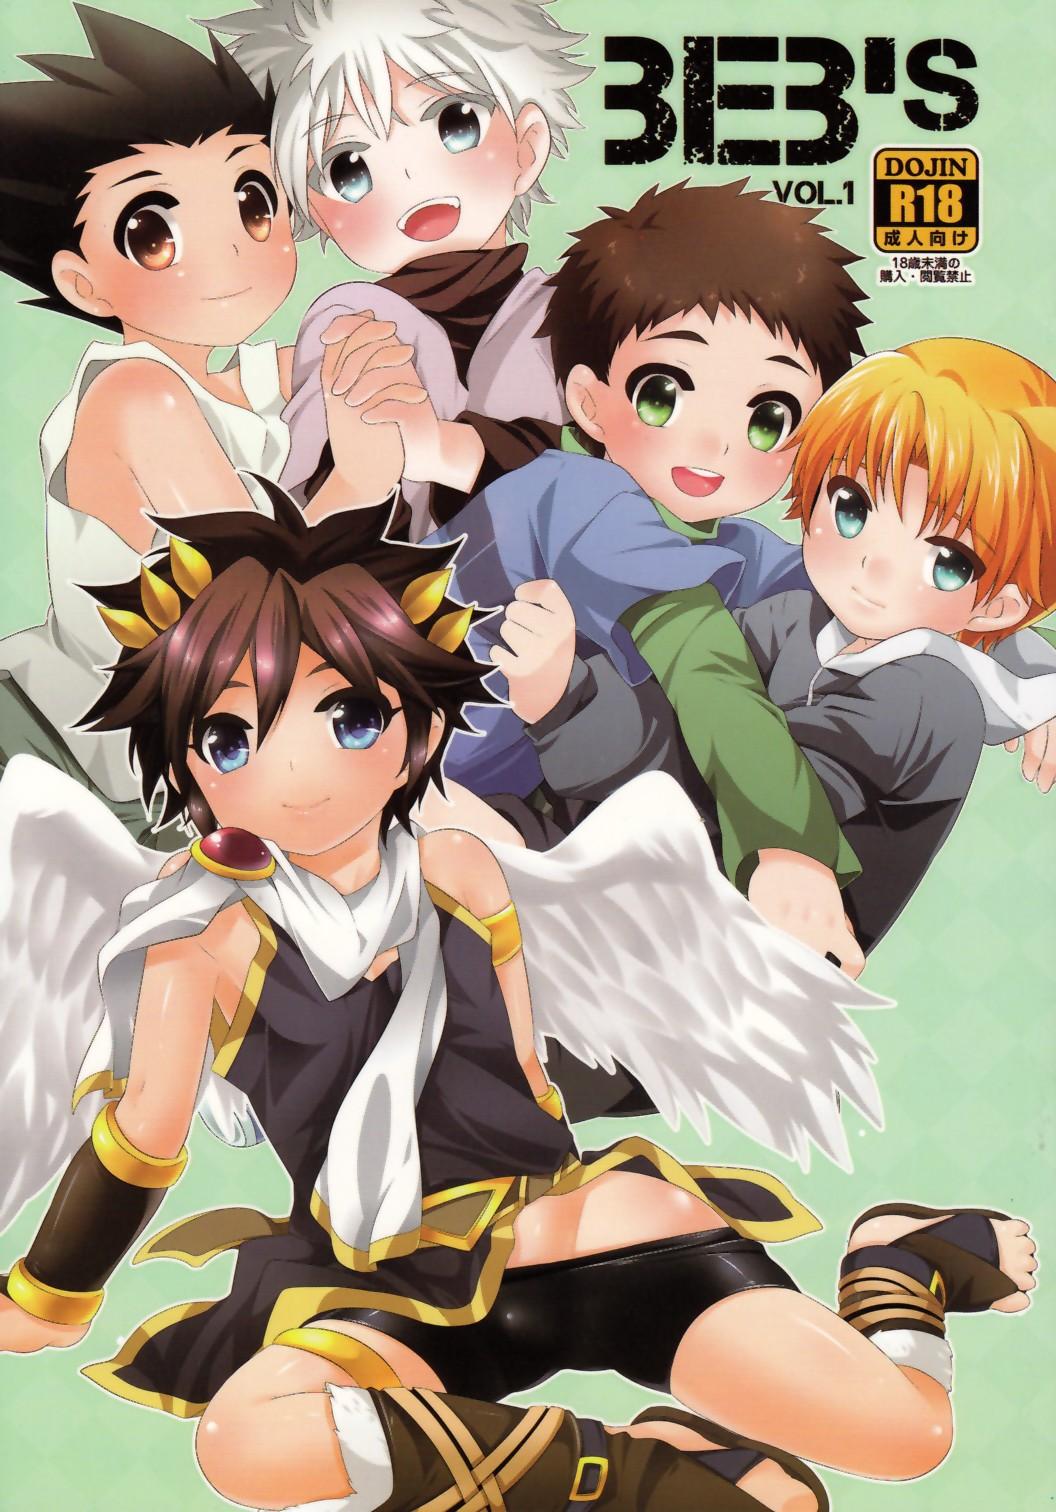 4some BeB's Vol. 1 - Hunter x hunter Haiyore nyaruko san Kid icarus Ginga e kickoff Fantasy - Picture 1